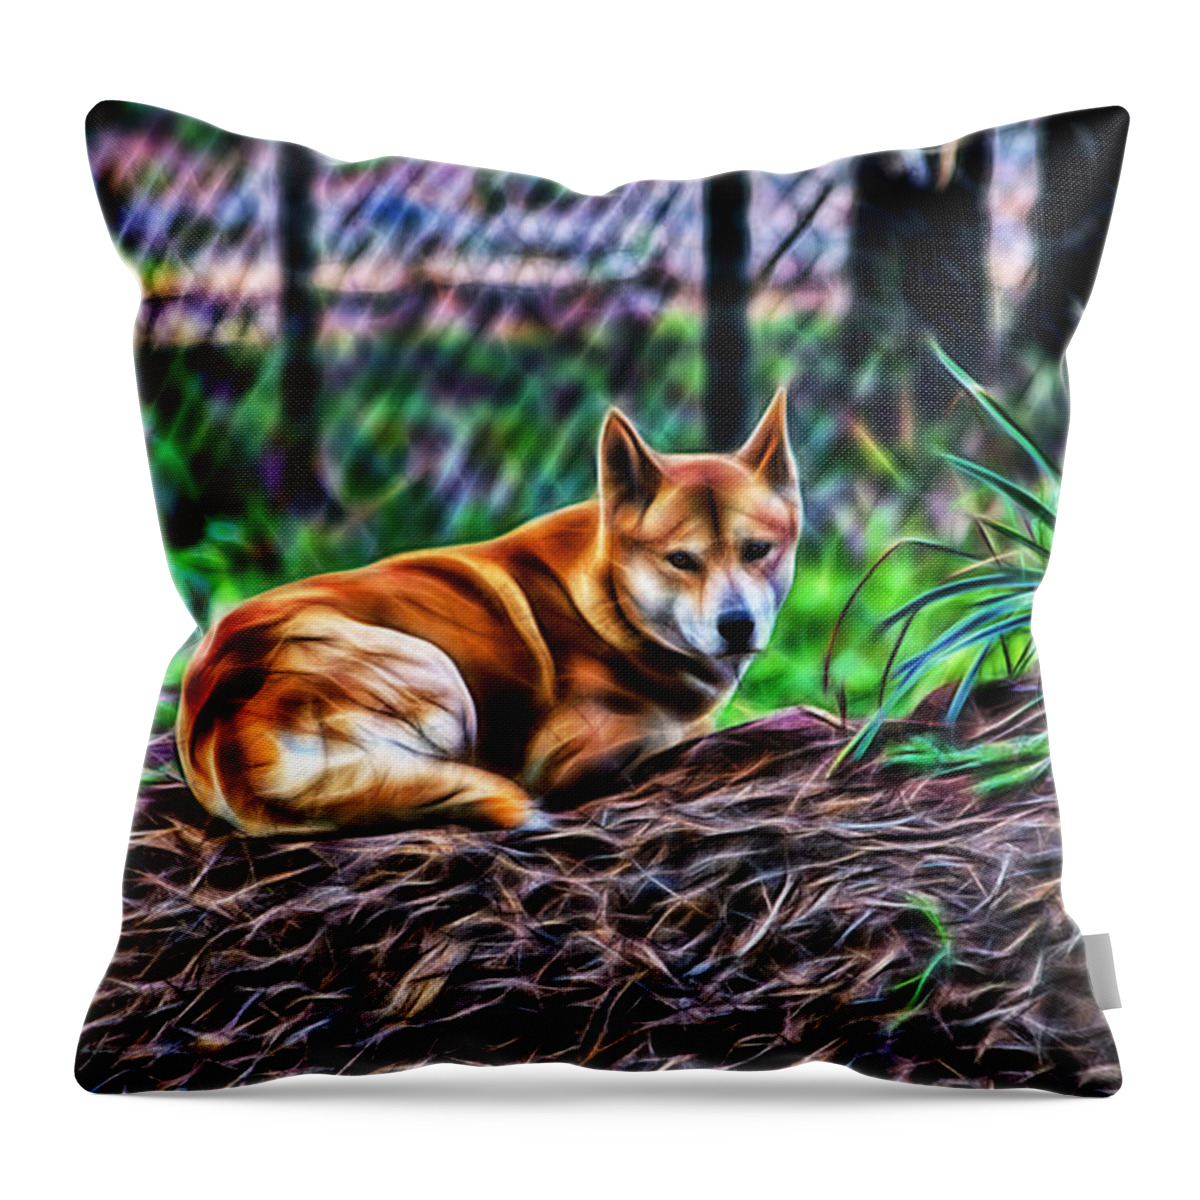 #dingo Throw Pillow featuring the photograph Dingo from Ozz by Miroslava Jurcik